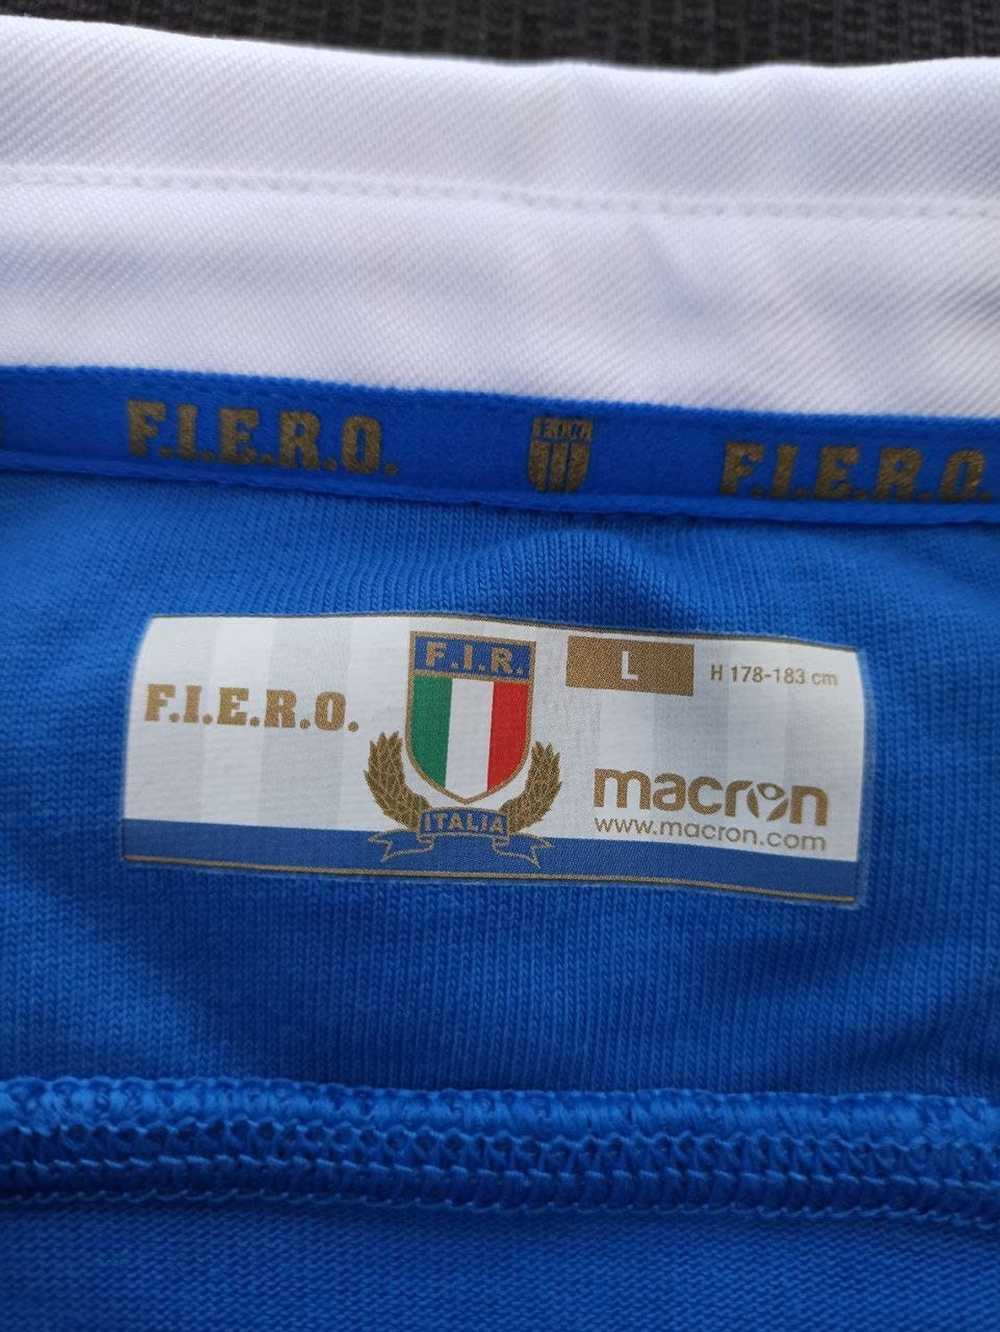 Macron Macron Italy rugby team jersey - image 2